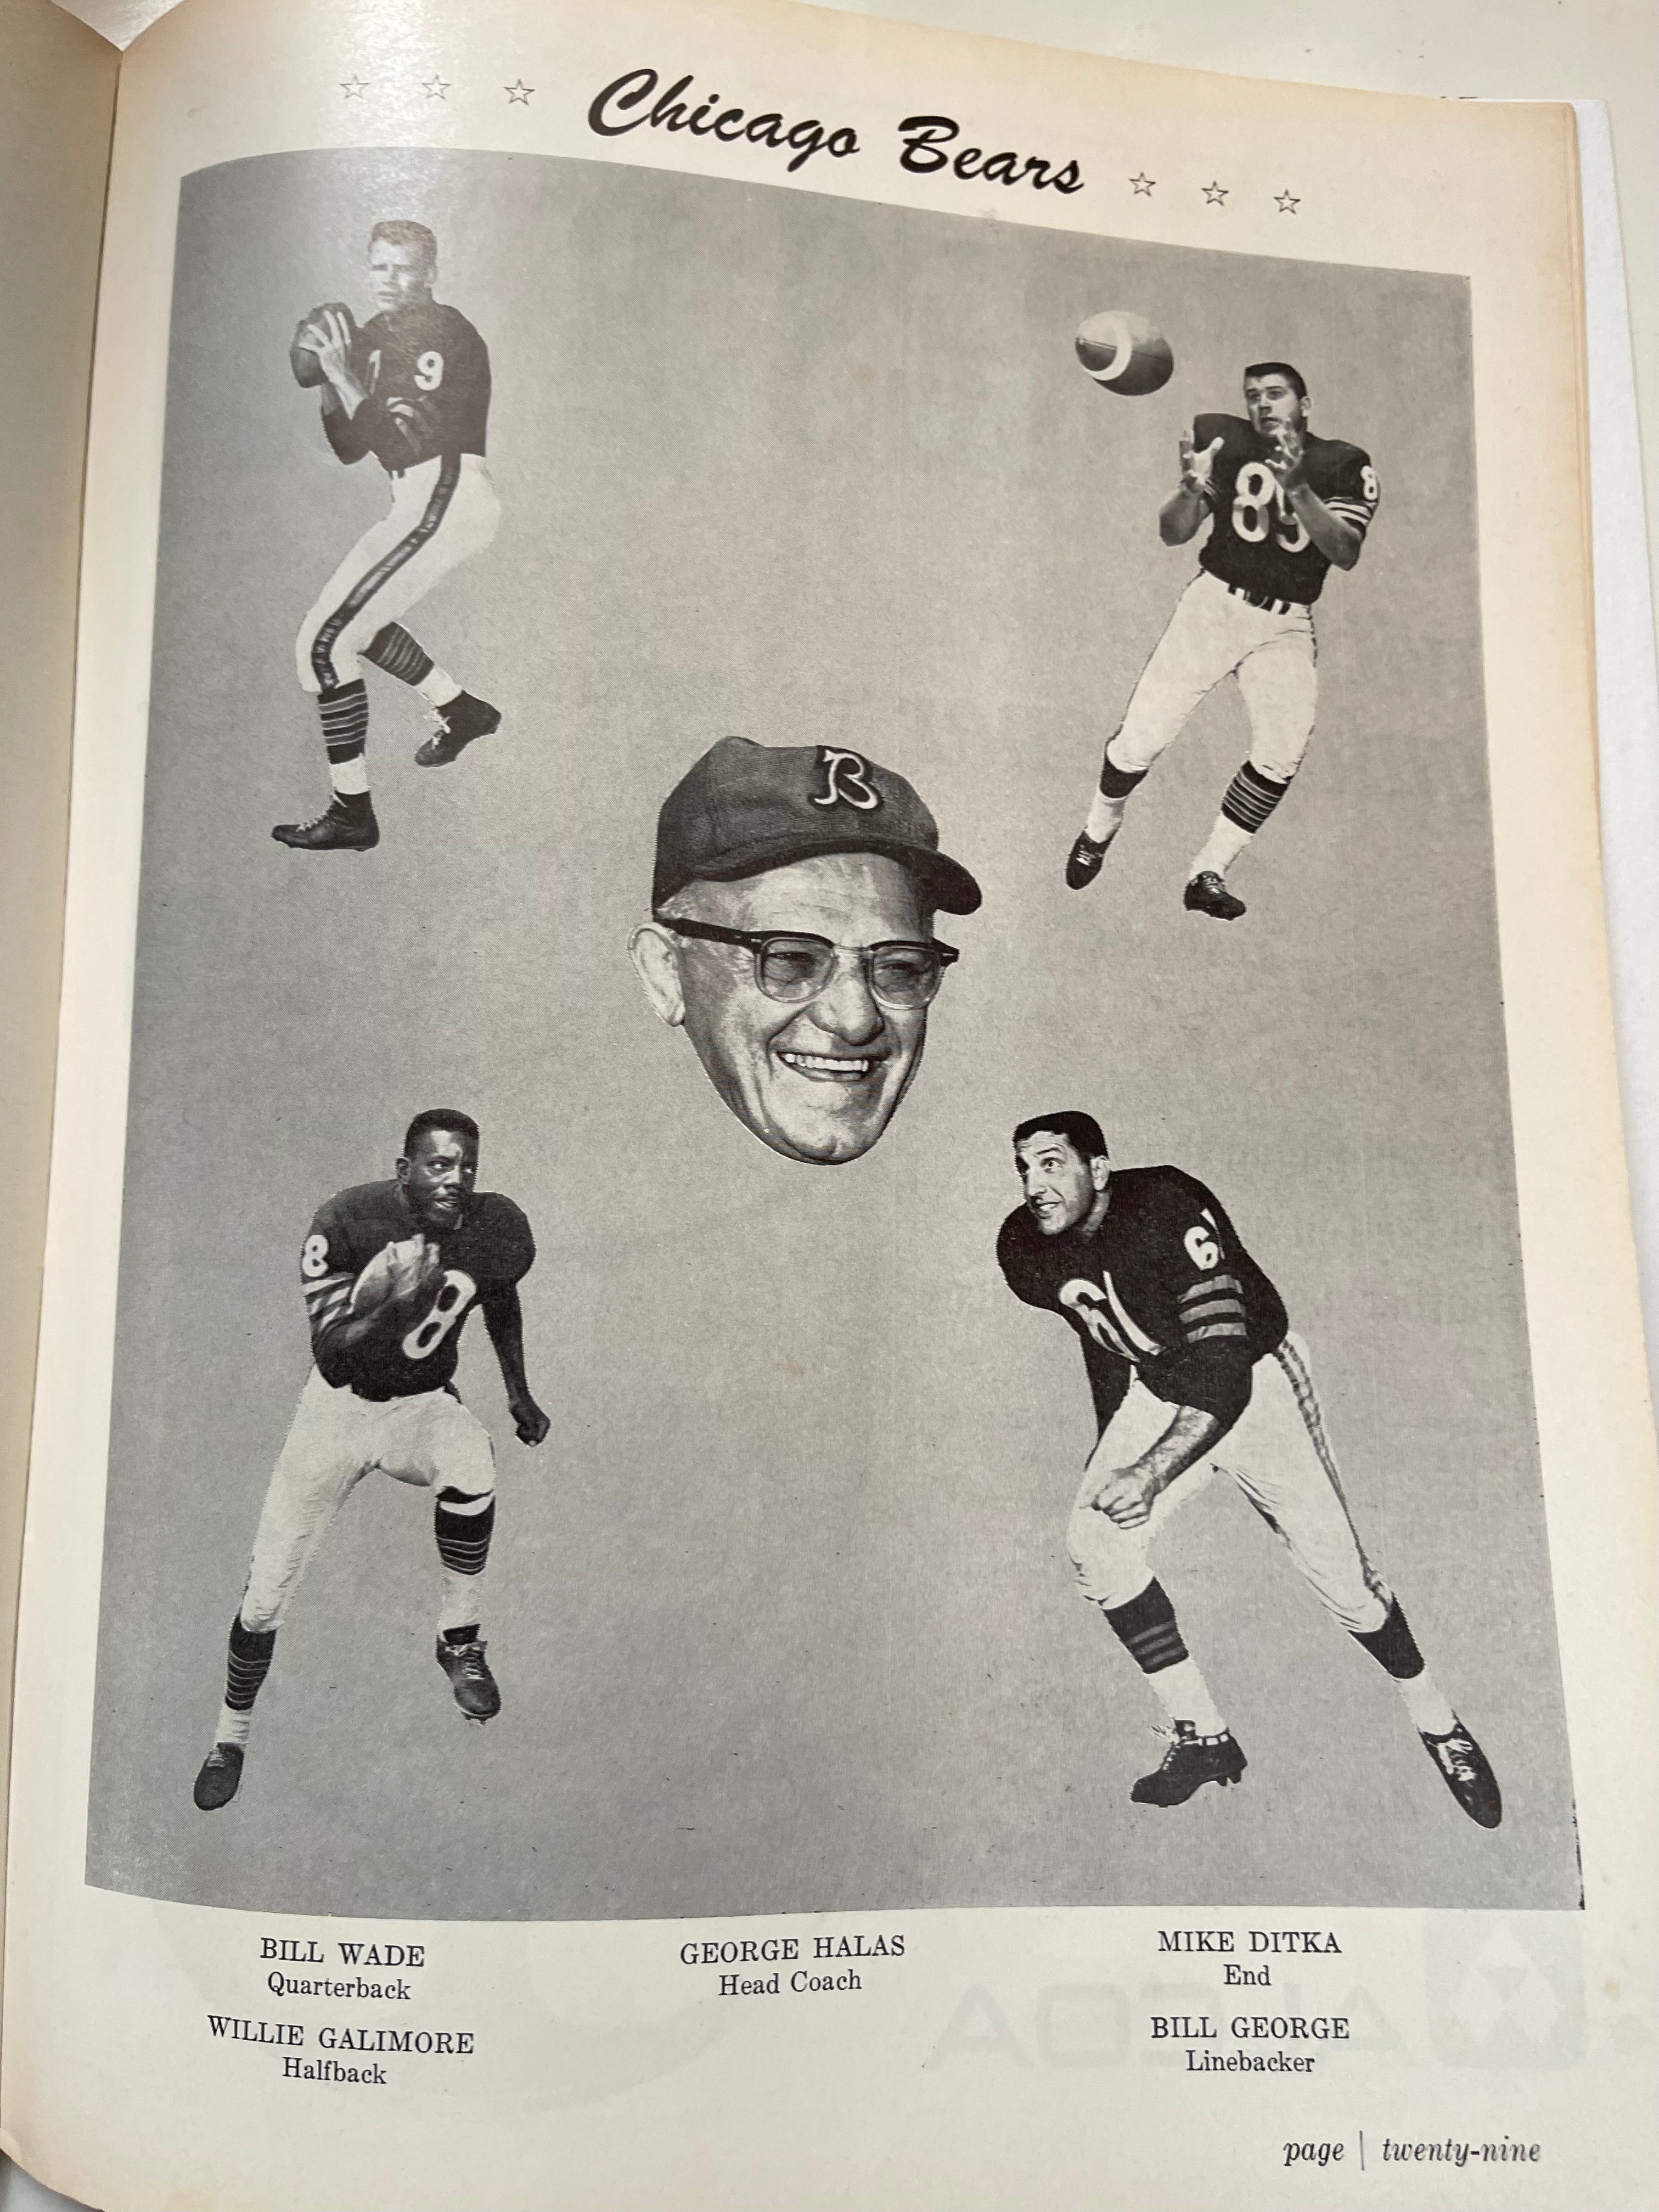 1963 Green Bay Packers vs the Bears football game program